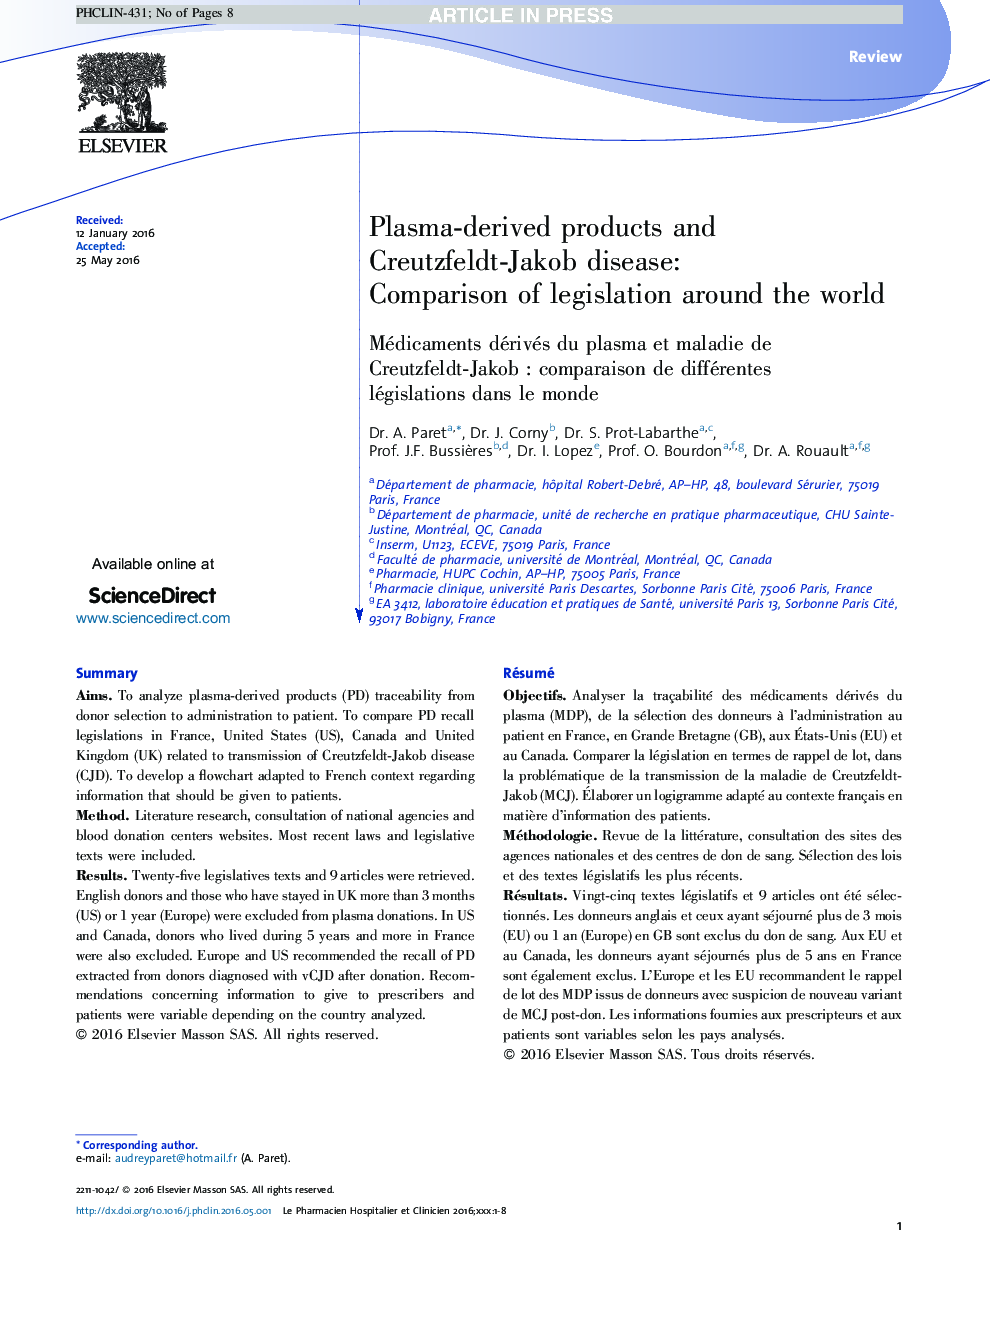 Plasma-derived products and Creutzfeldt-Jakob disease: Comparison of legislation around the world